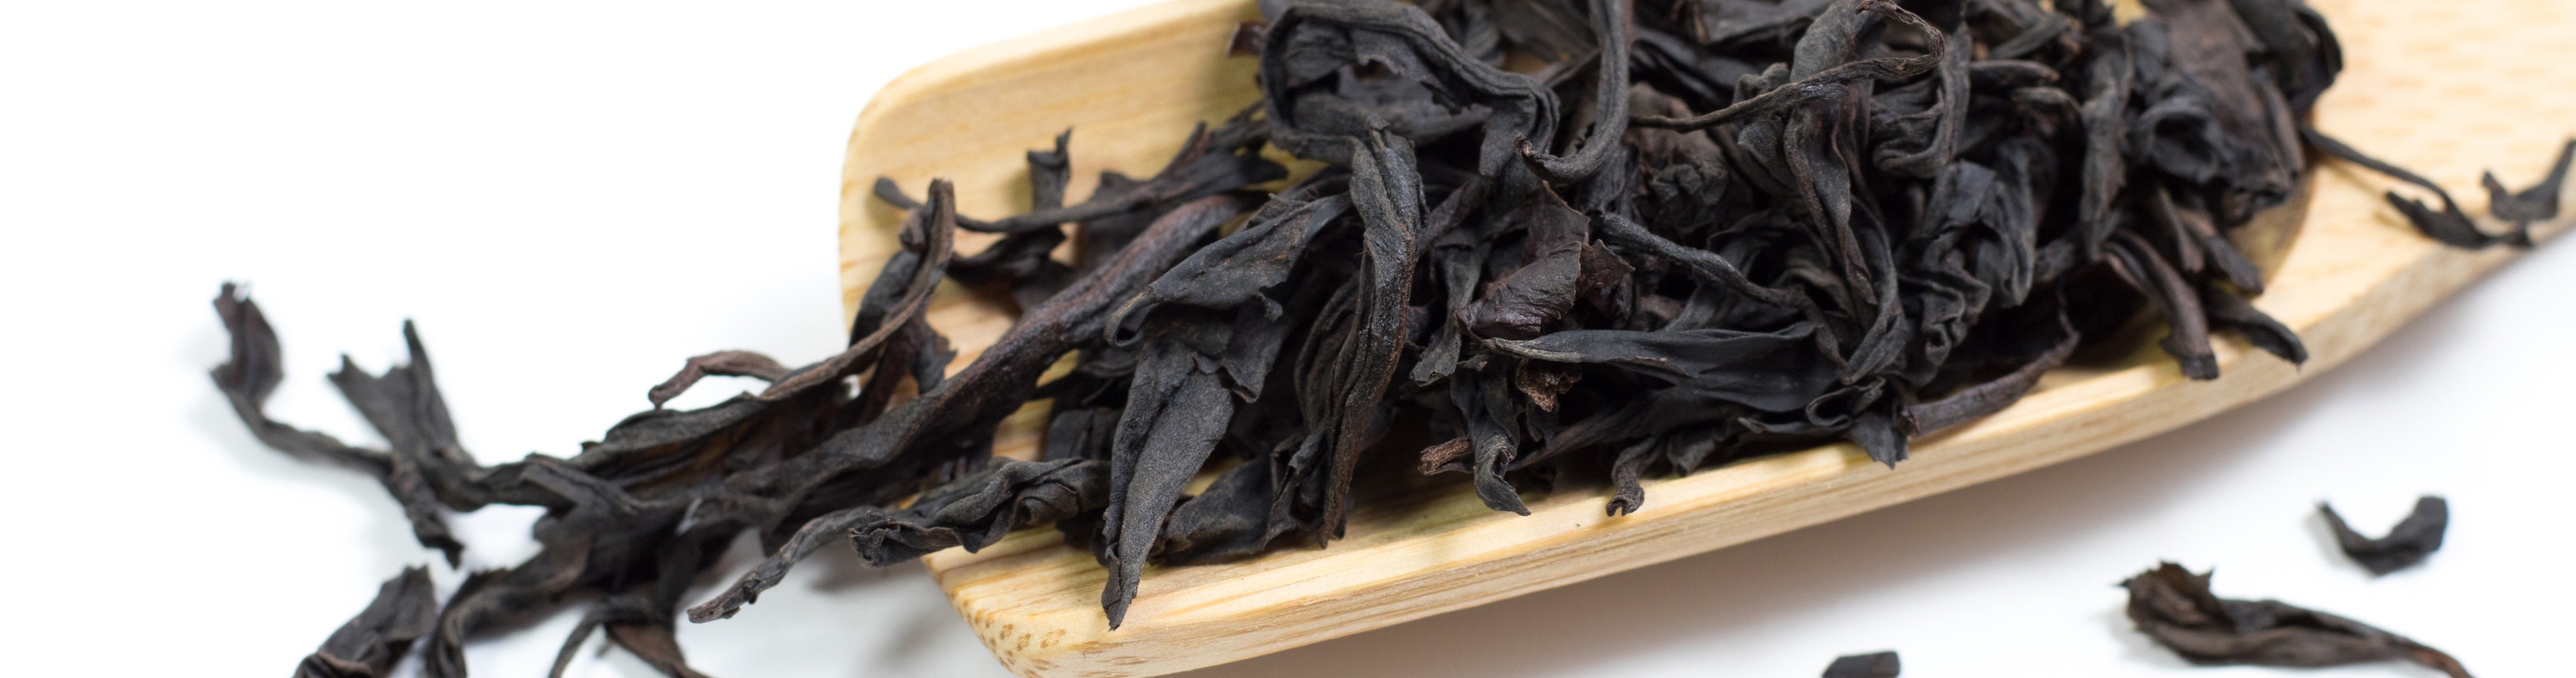 The Most Expensive Tea - Da Hong Pao